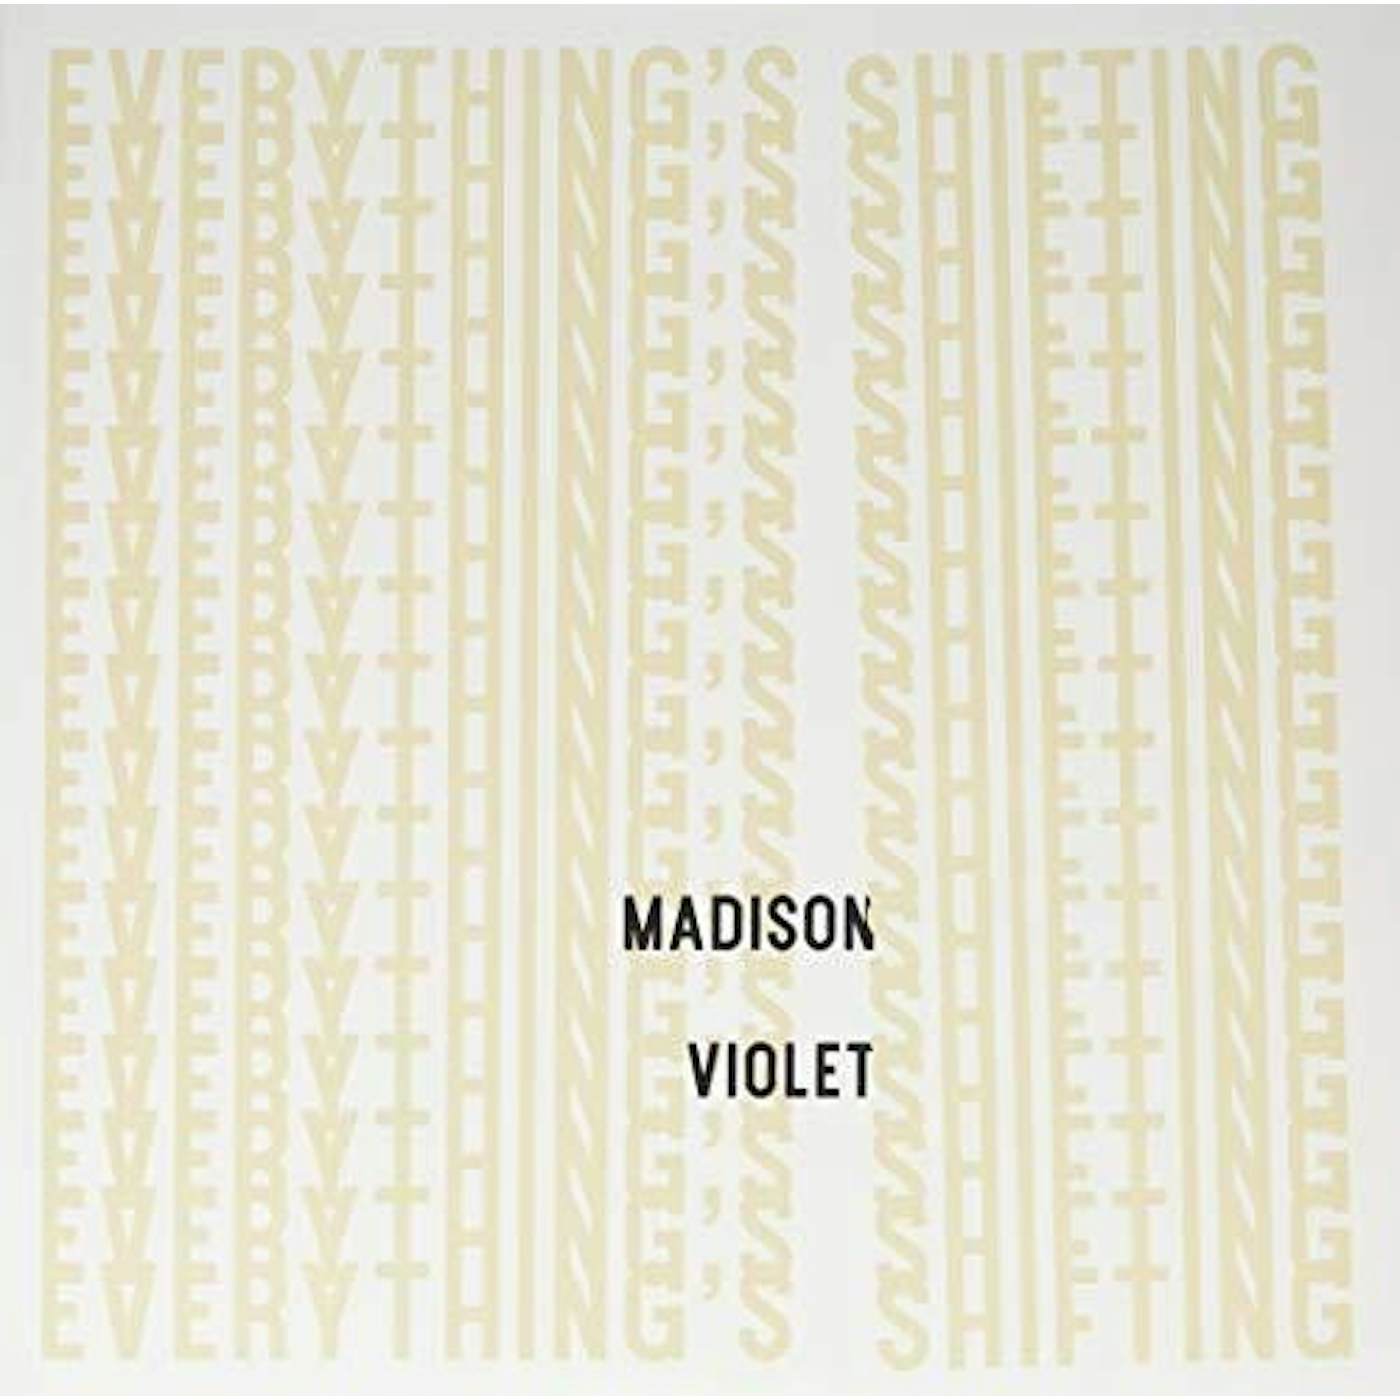 Madison Violet Everything's Shifting Vinyl Record